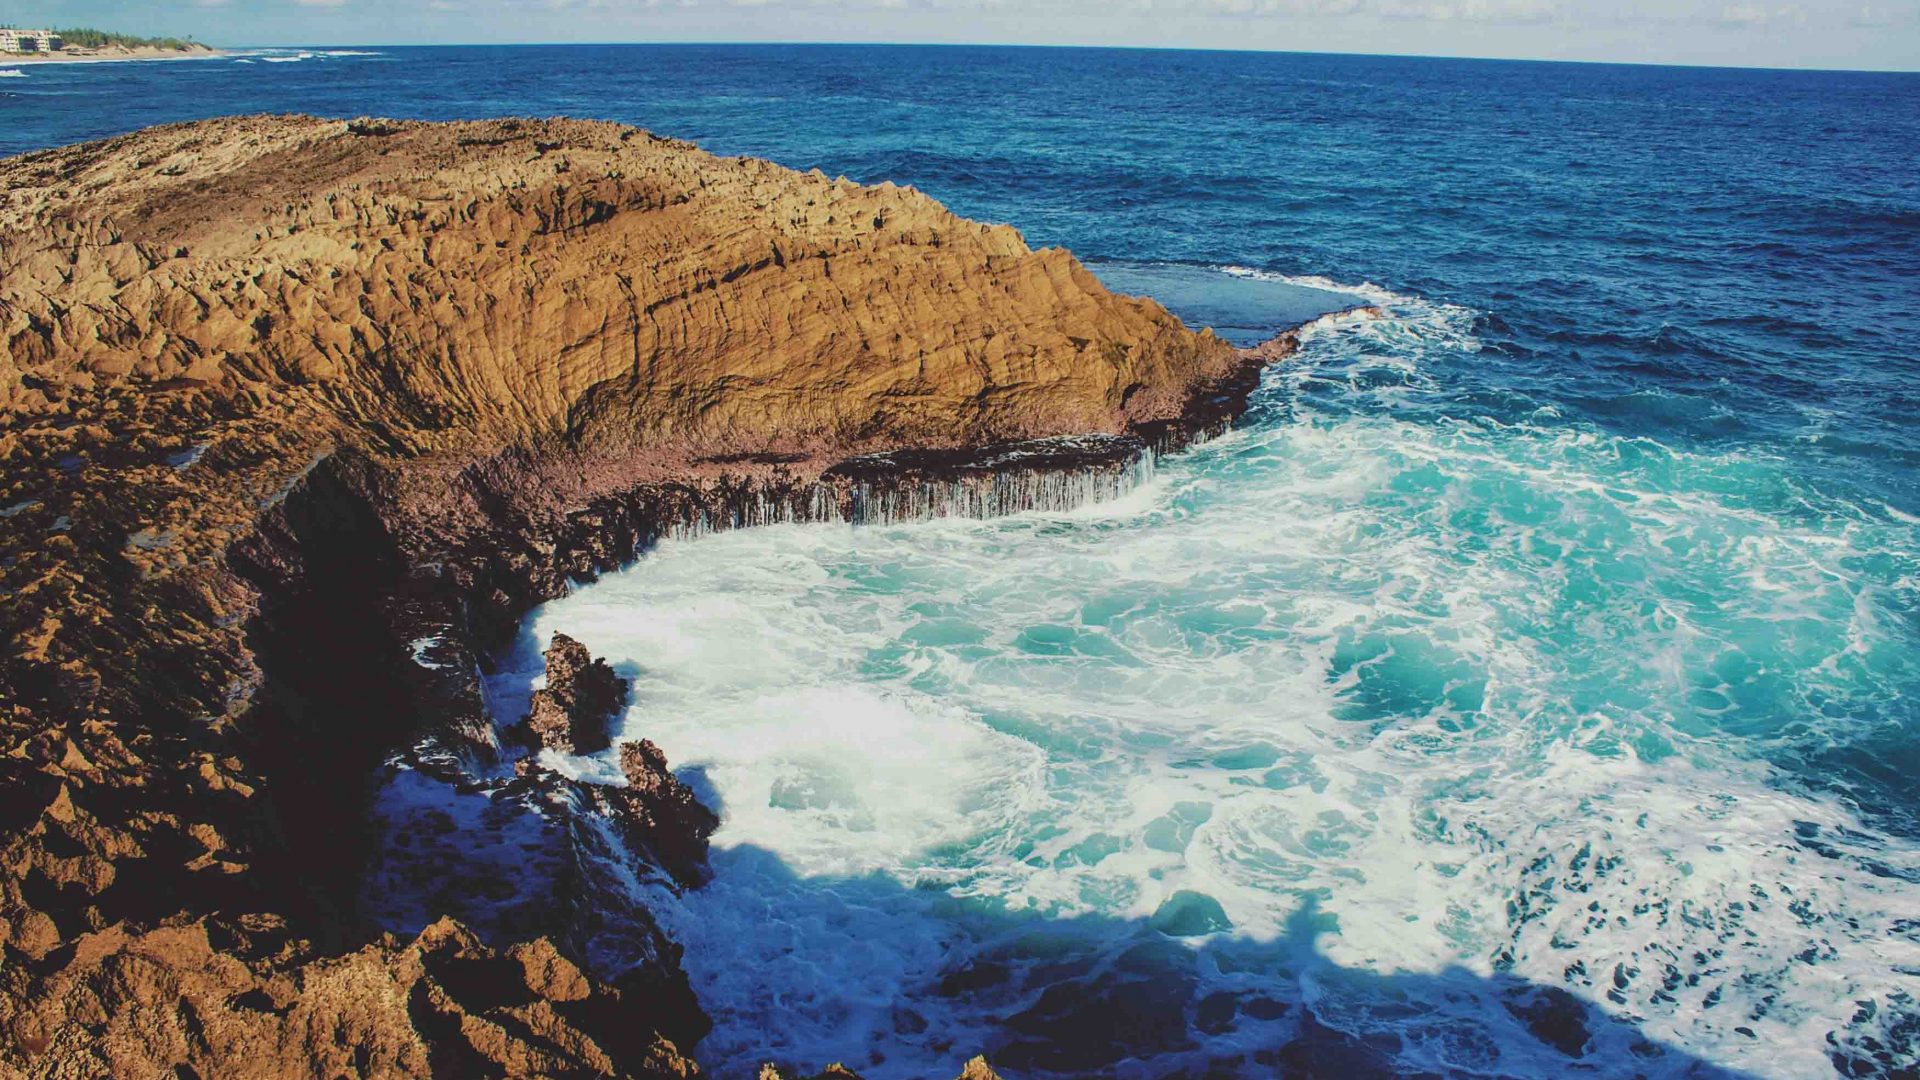 The coast line in Puerto Rico.